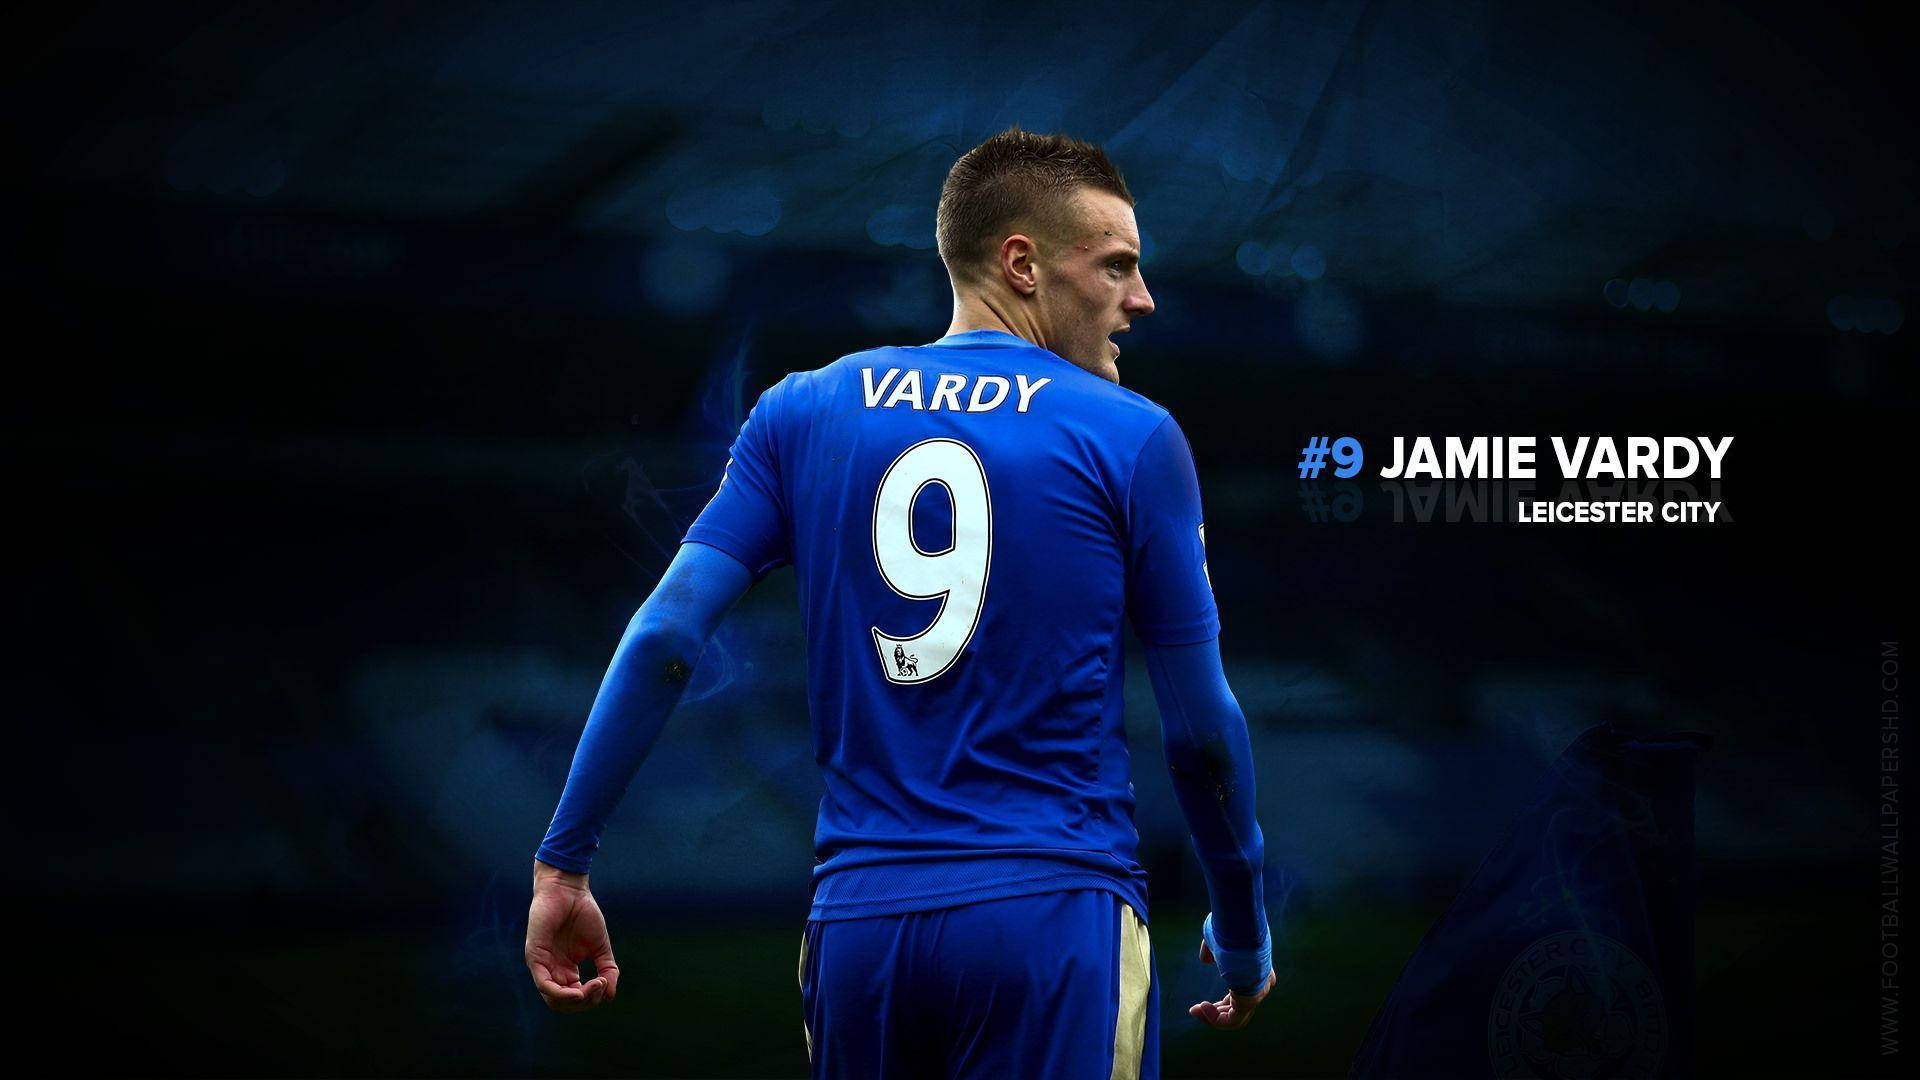 Jamie Vardy Jersey 9 Leicester Wallpaper